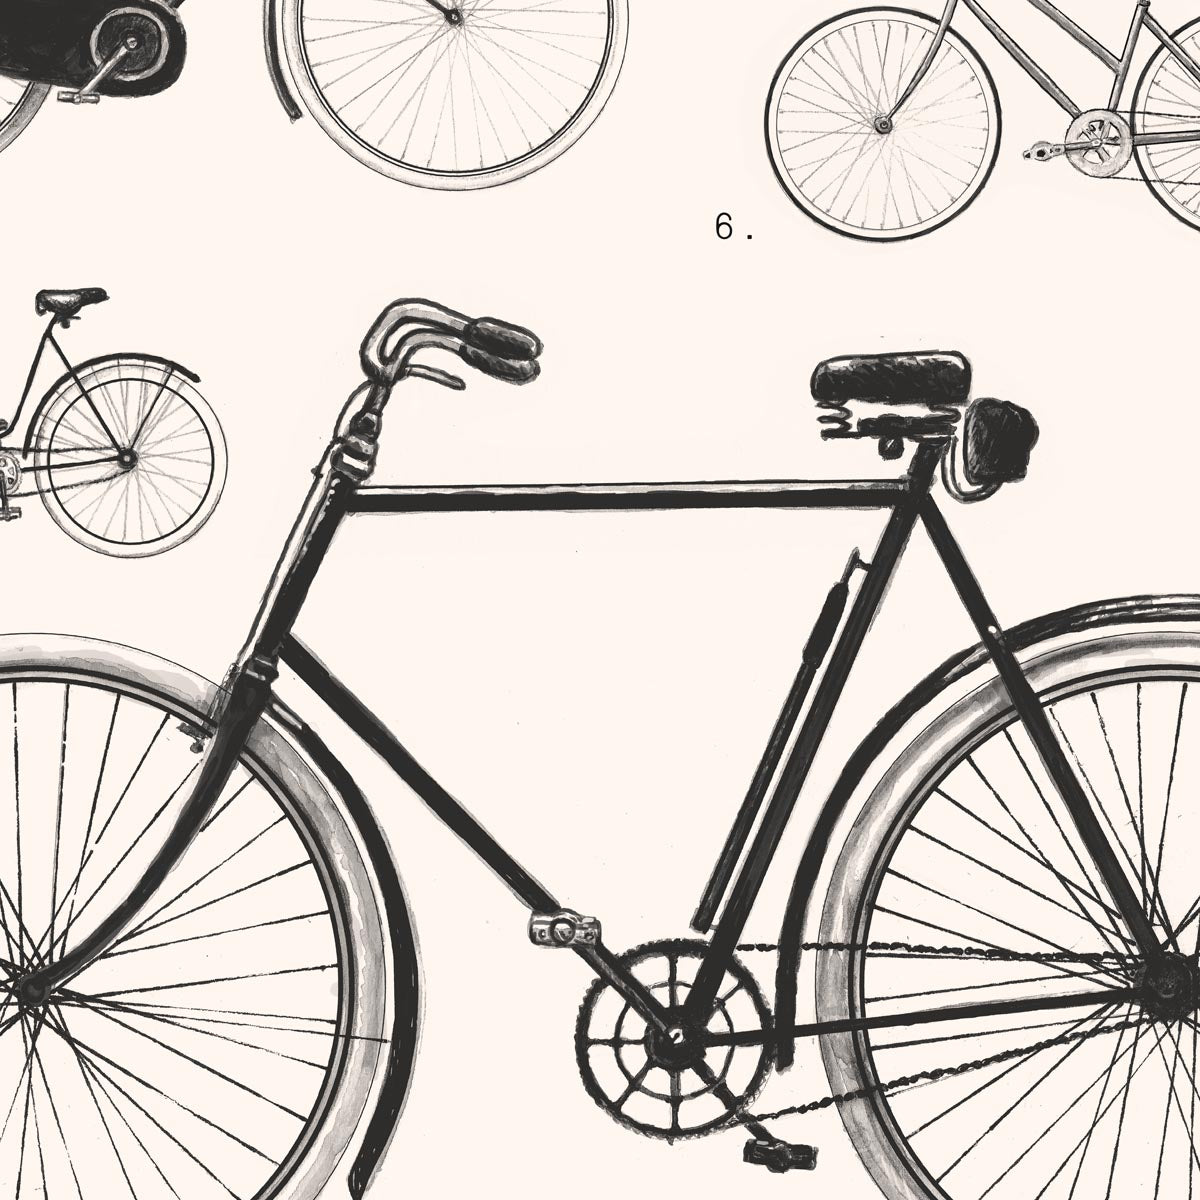 Bicyclettes by Florant Bodart